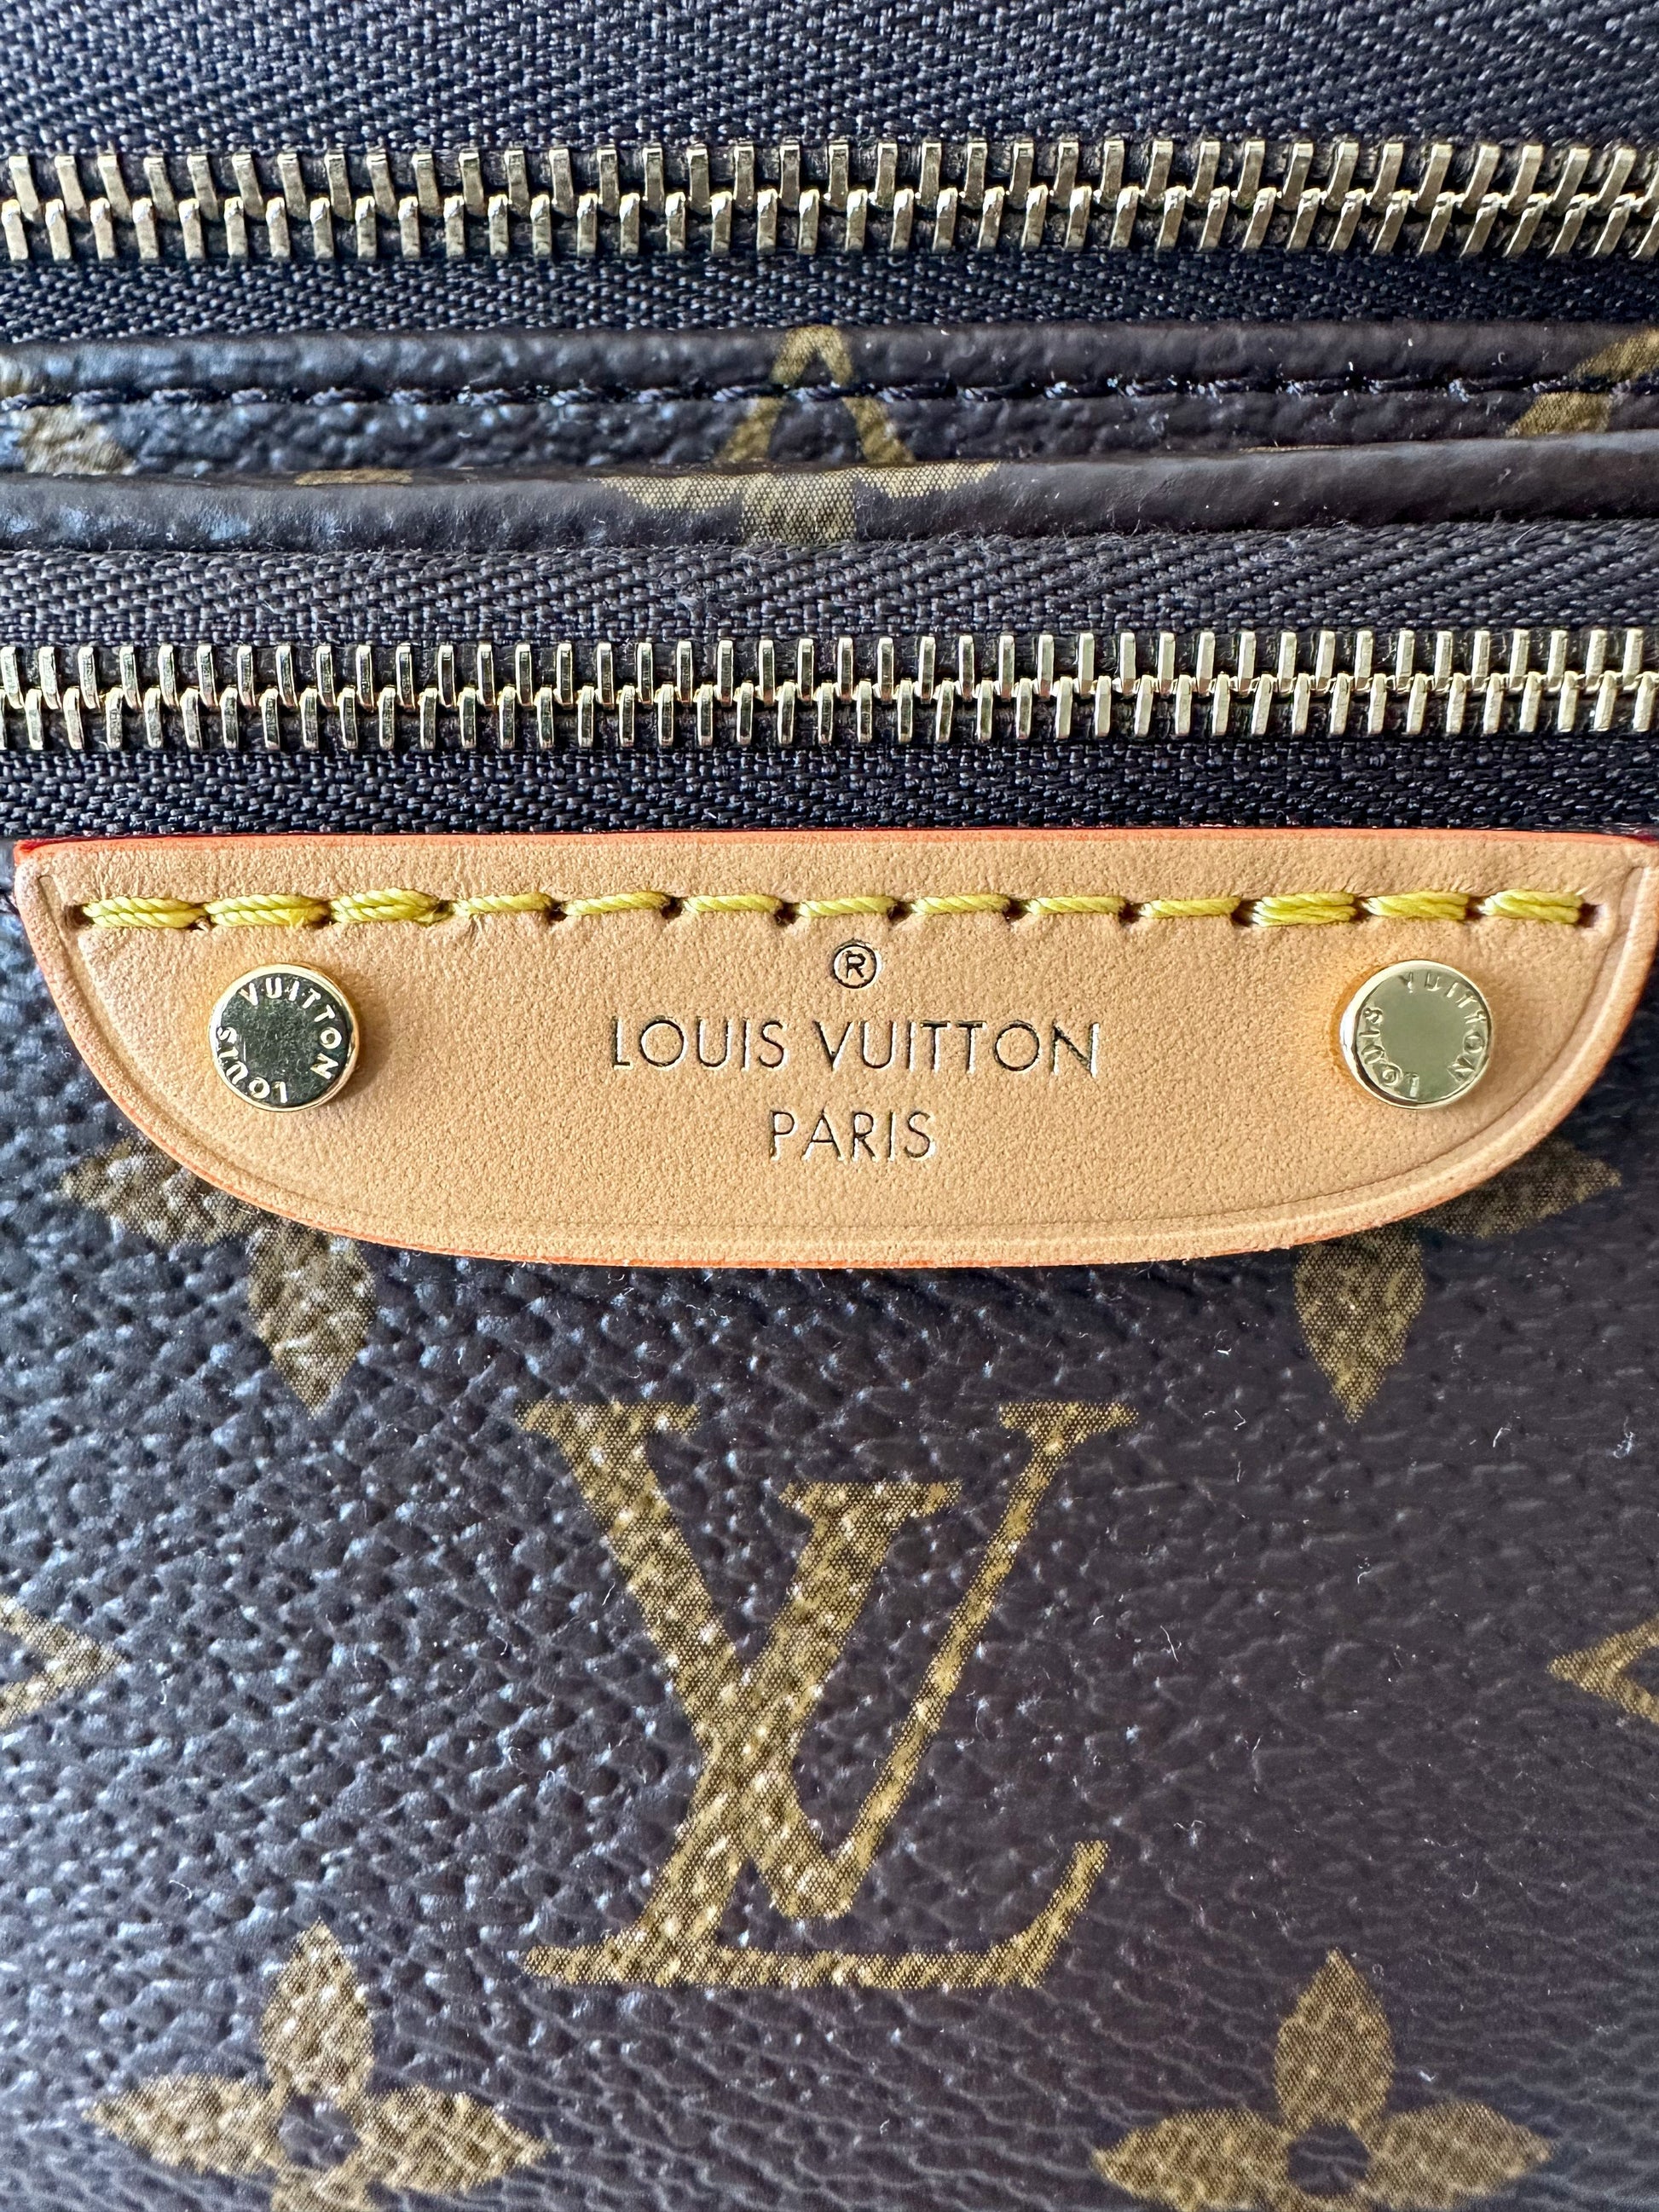 Louis Vuitton Mini Bumbag Monogram